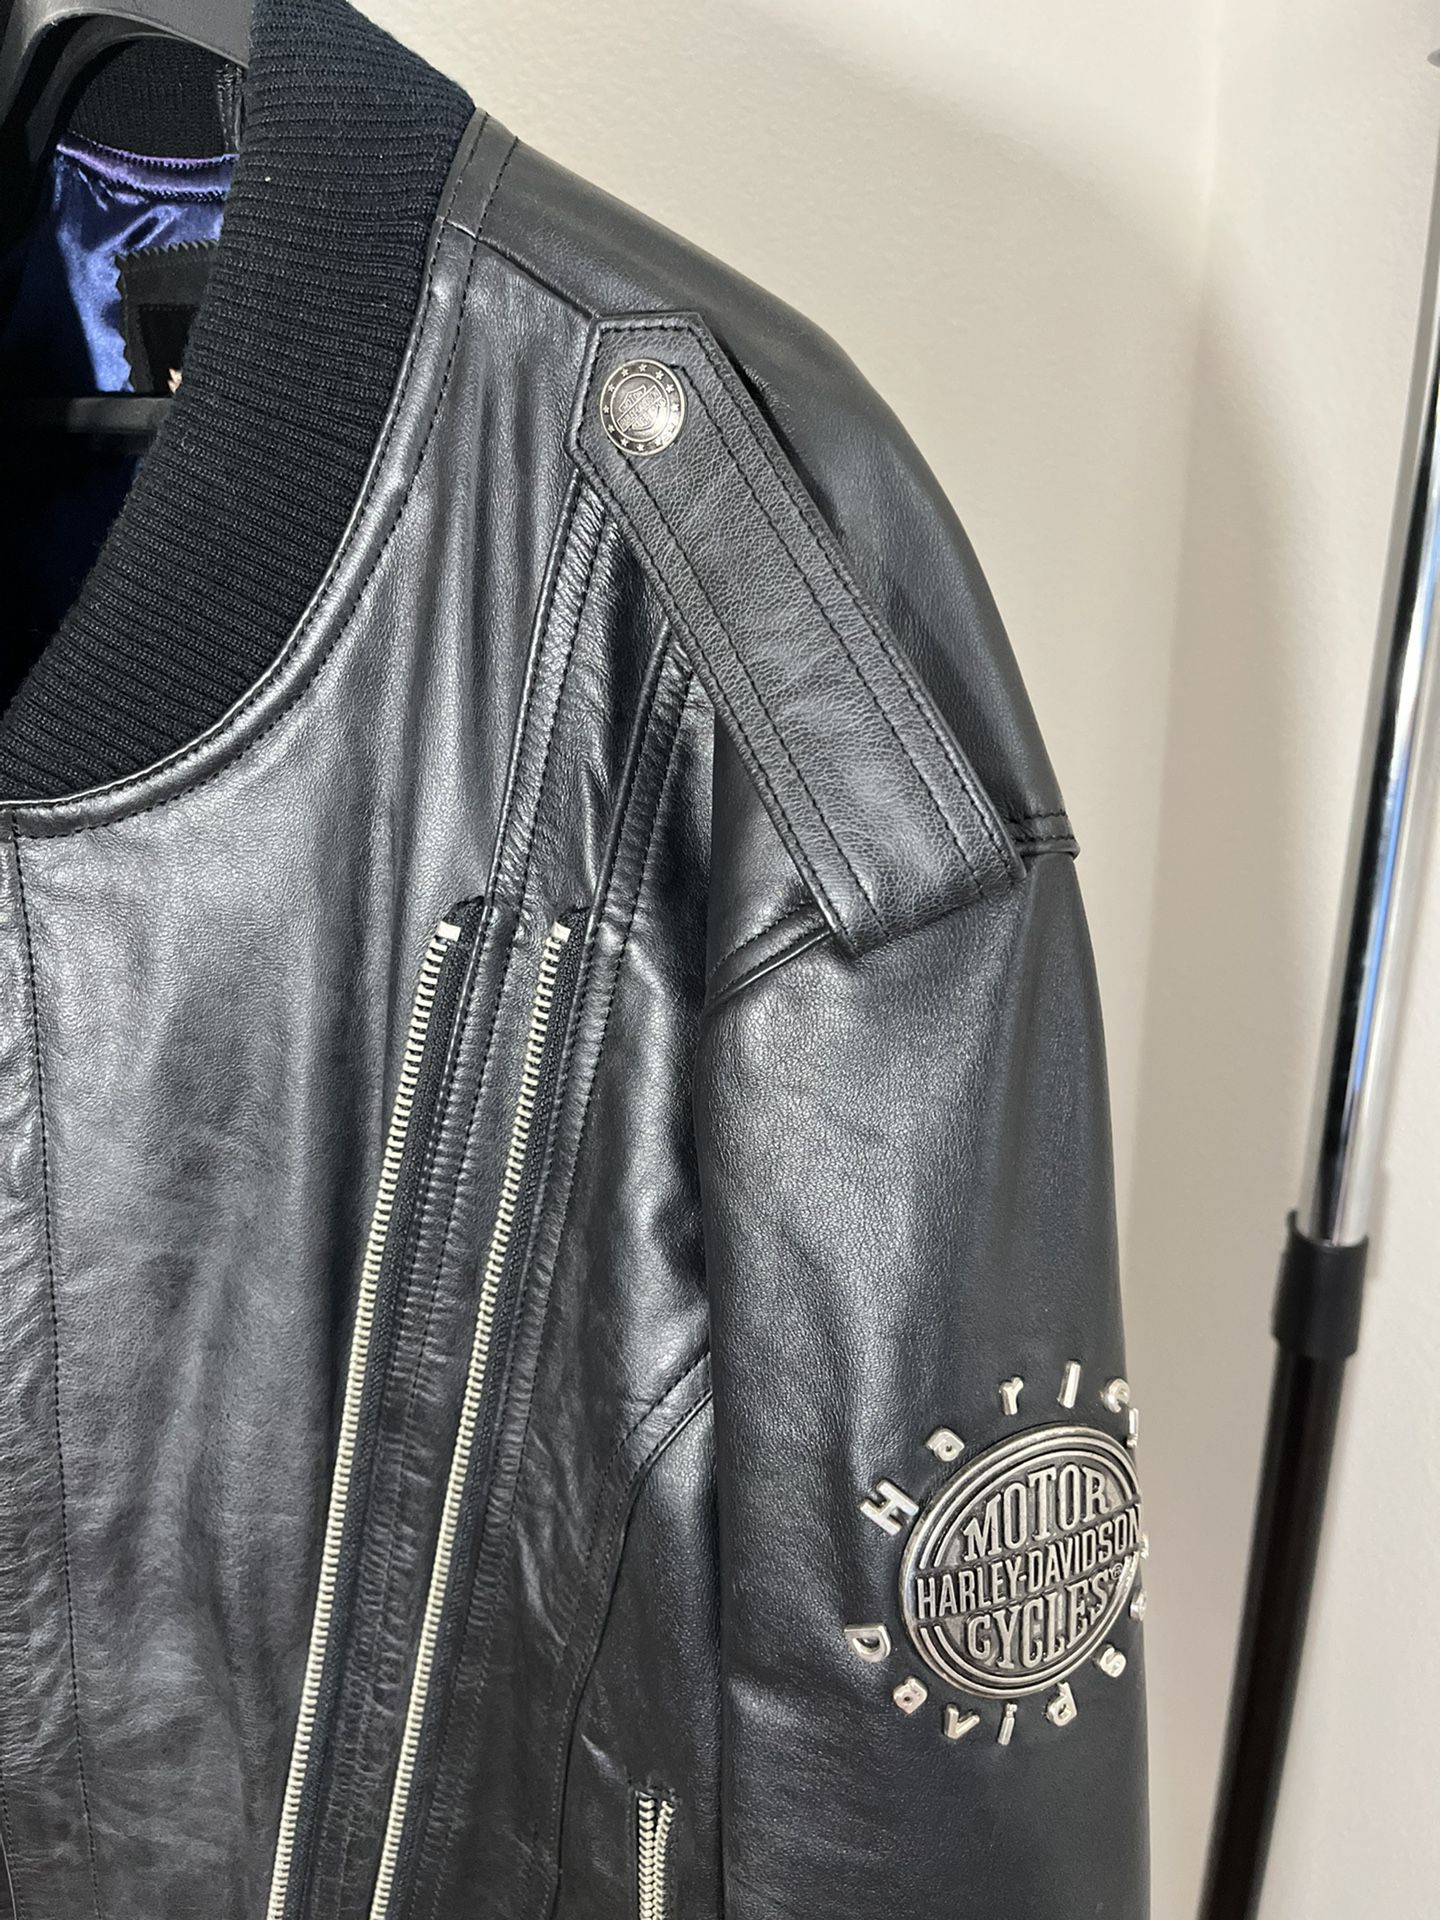 Harley Davidson Lady’s Jacket XL Women